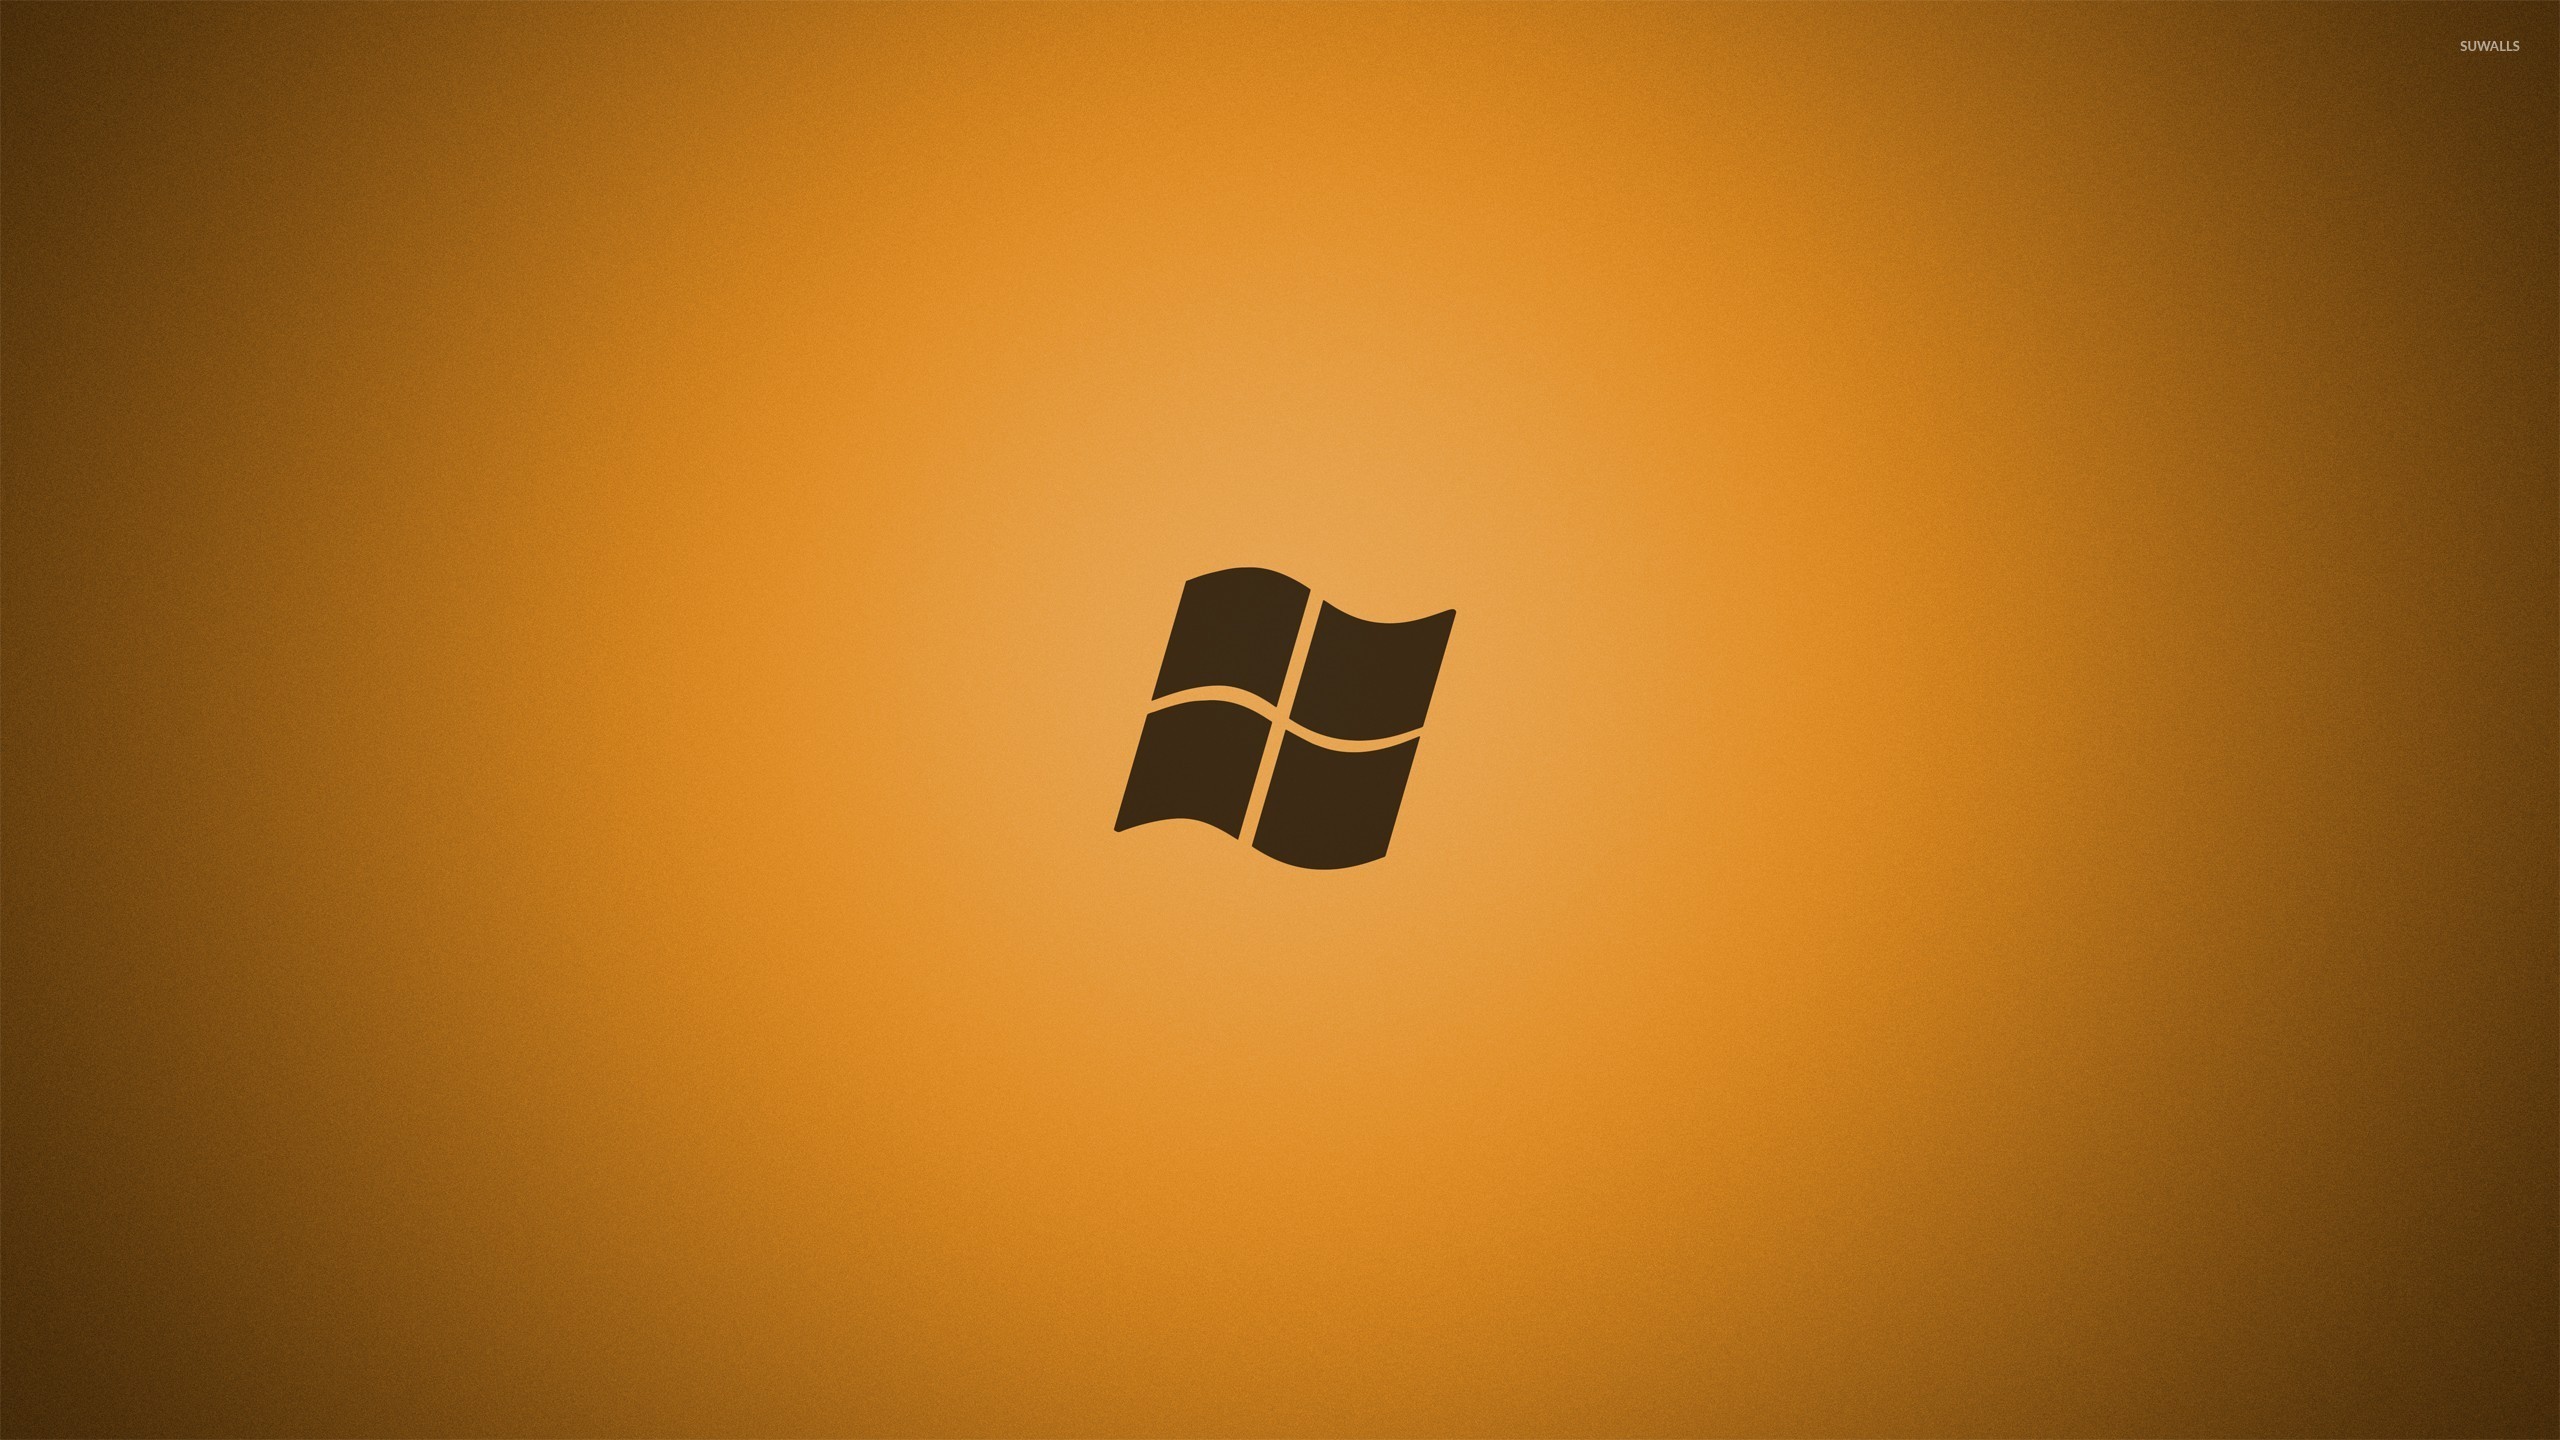 Windows 7 logo on golden background wallpaper - Computer wallpapers - #51081